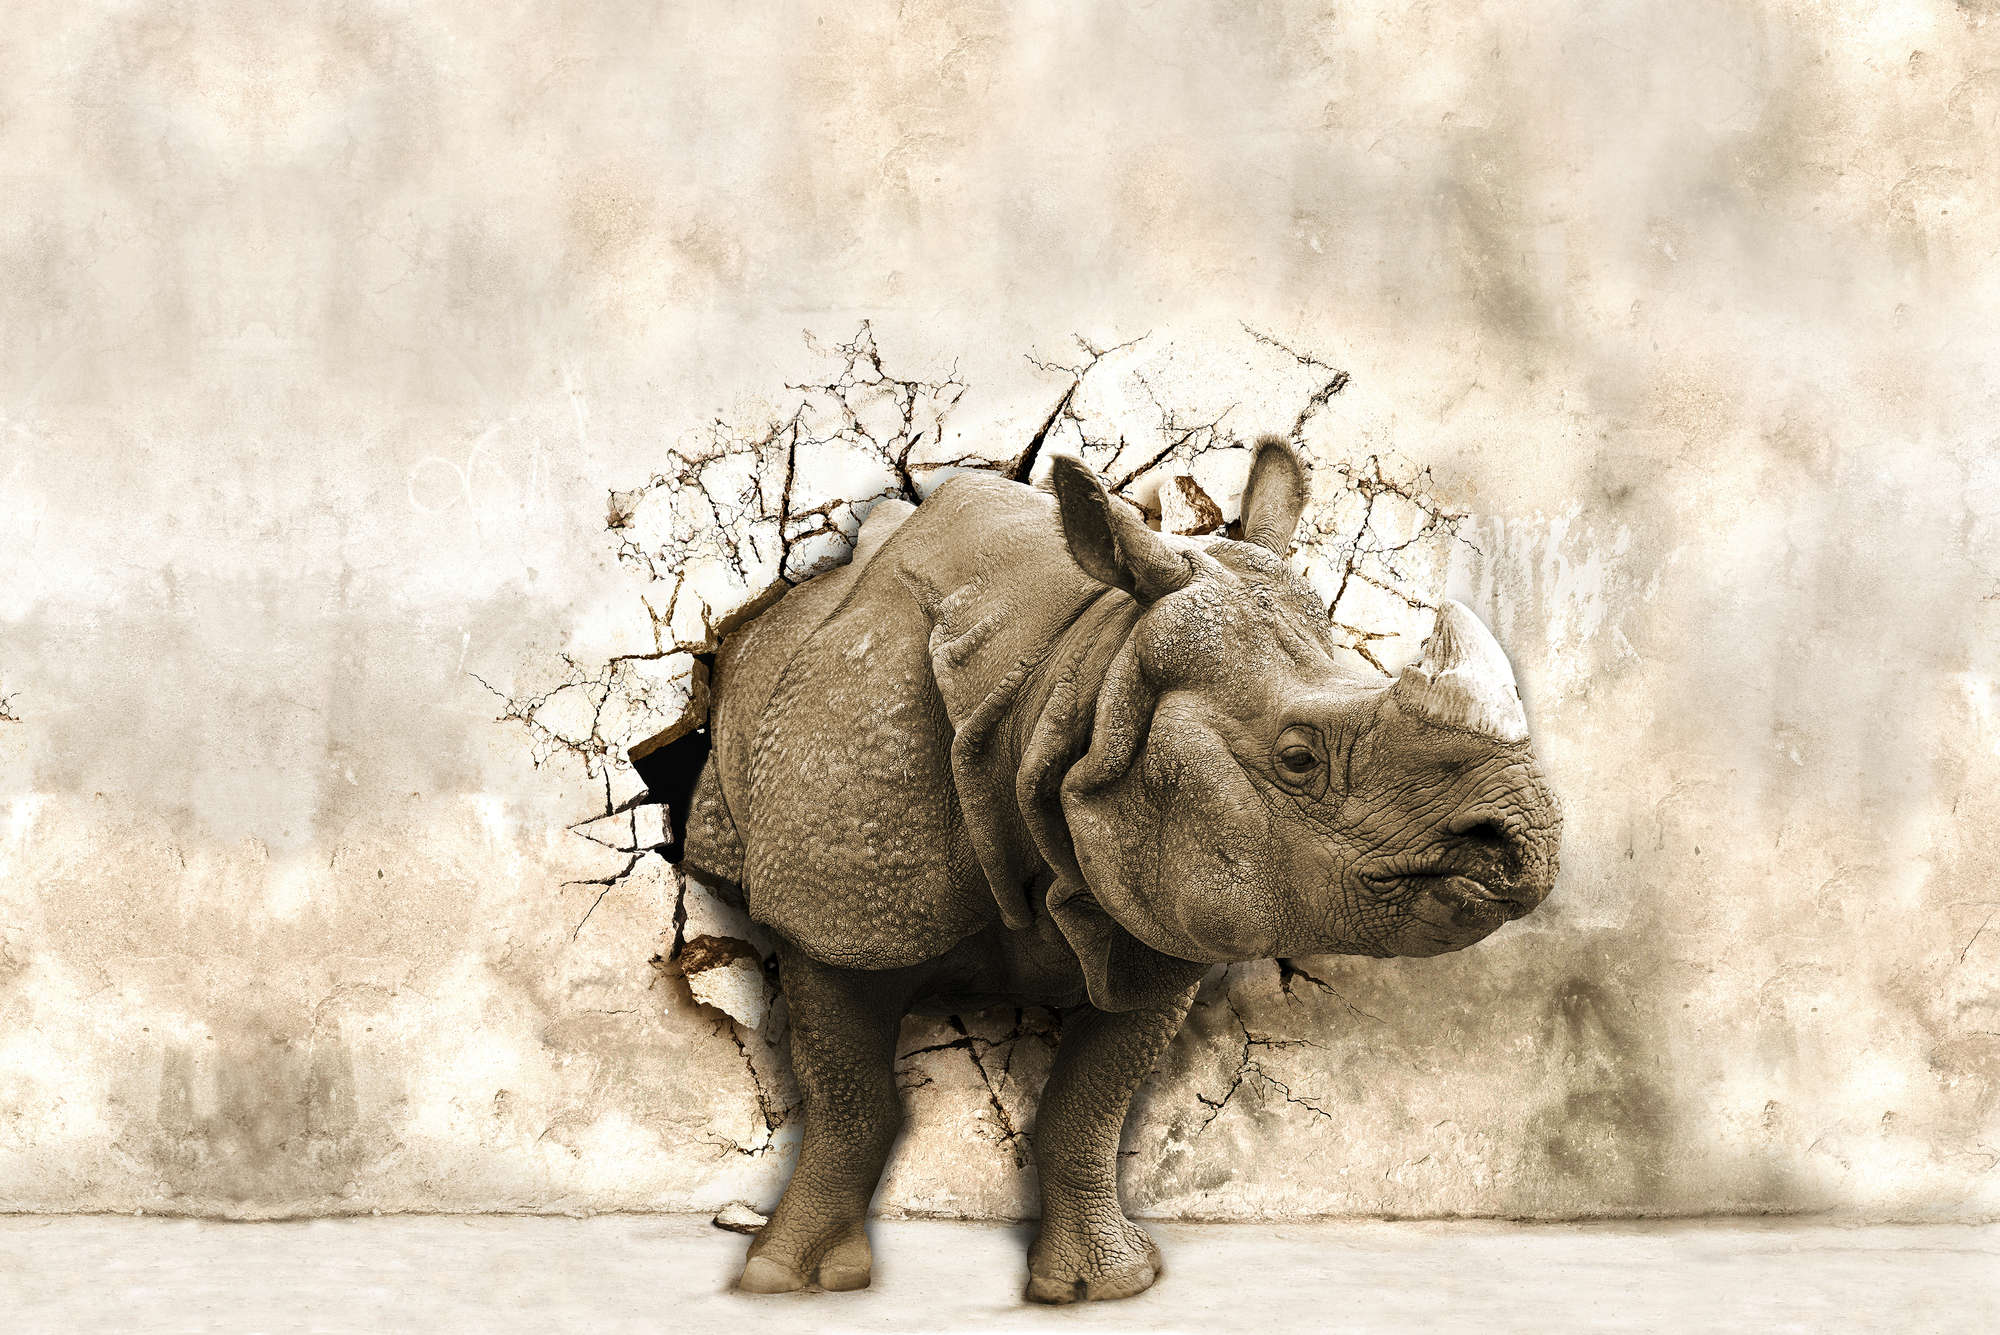             Animal Wallpaper Breakthrough met Rhino - structuurvlies
        